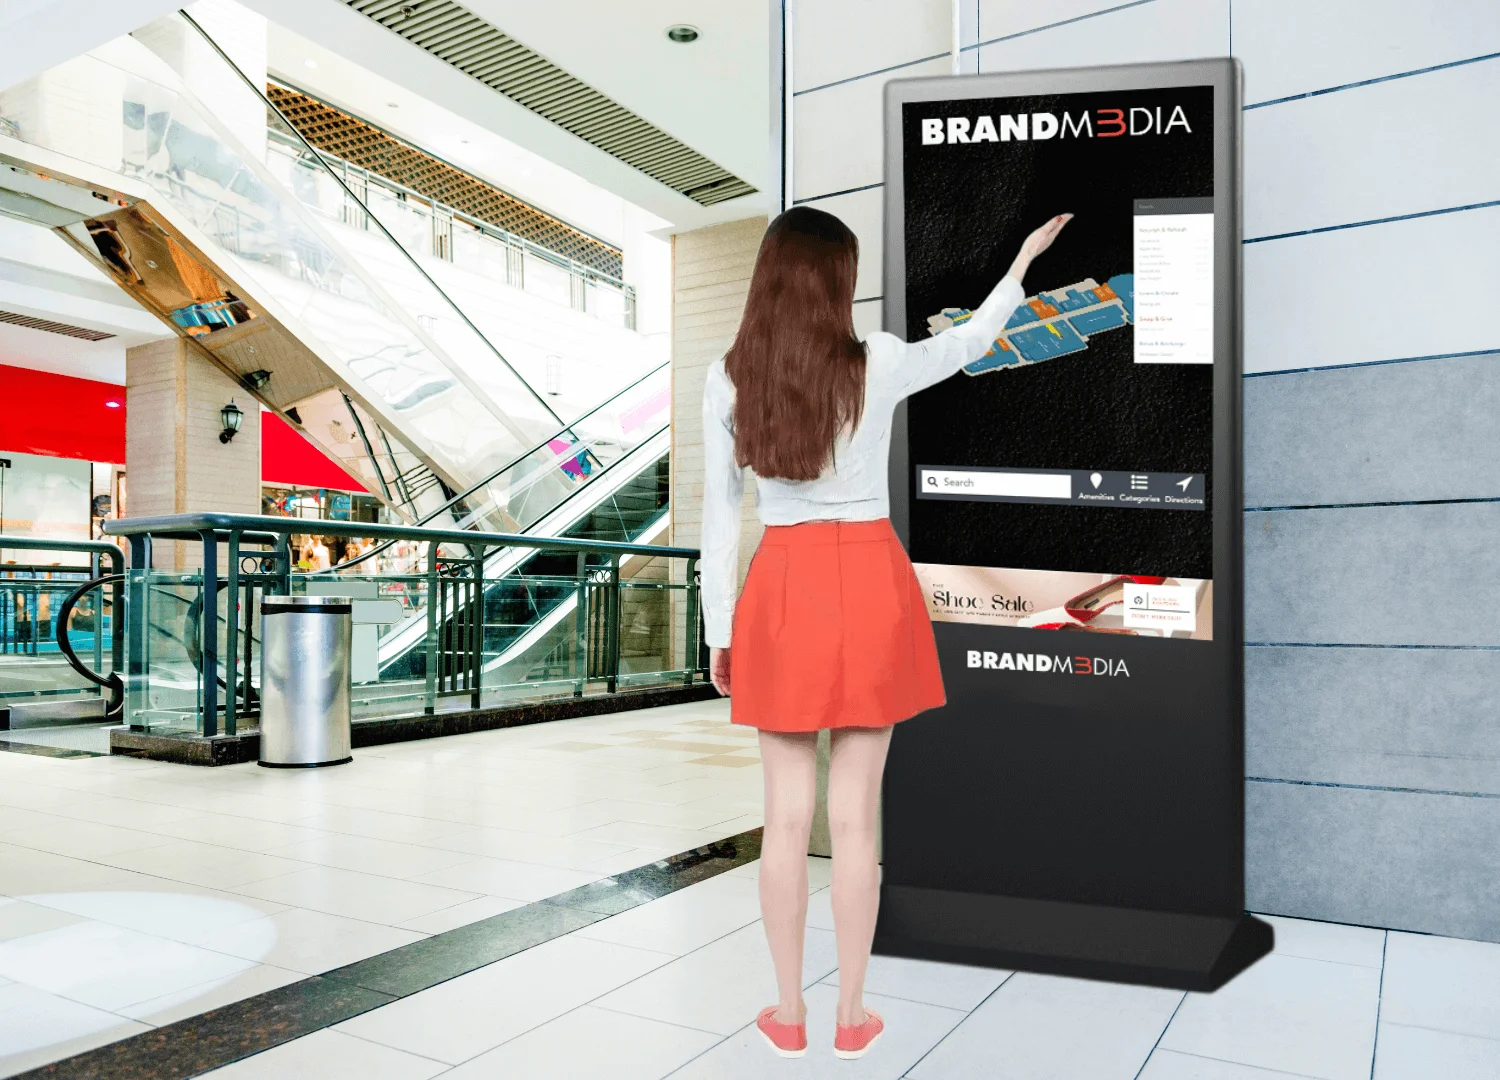 Interactive kiosk integrating smart technology for franchise seekers